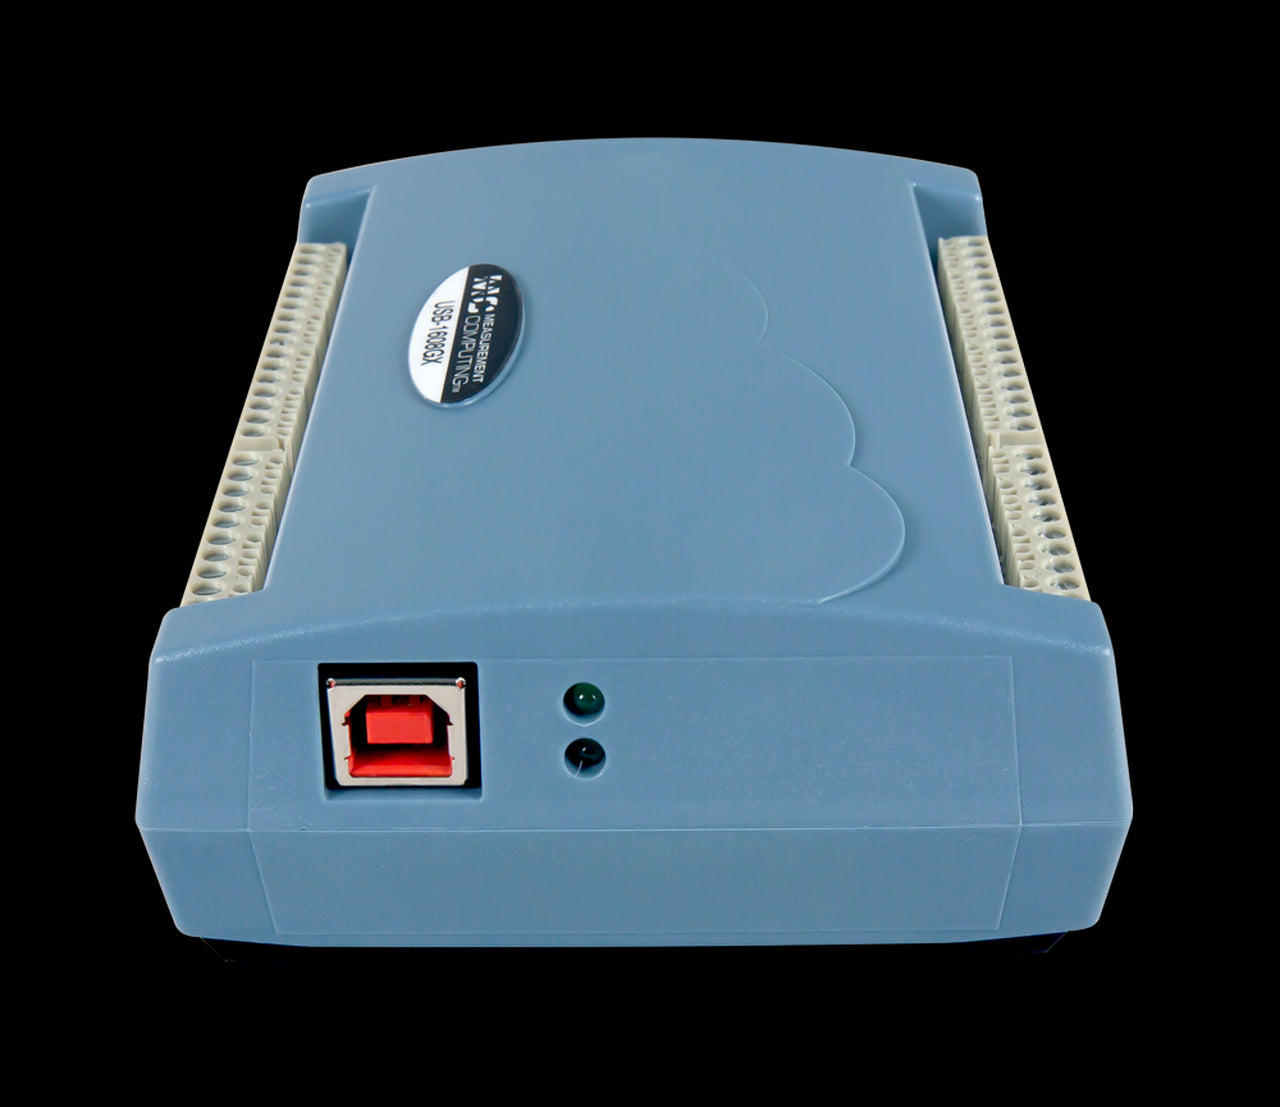 MCC USB-1608GX 16-bit, 500 kS/s High-Speed Multifunction USB DAQ Device